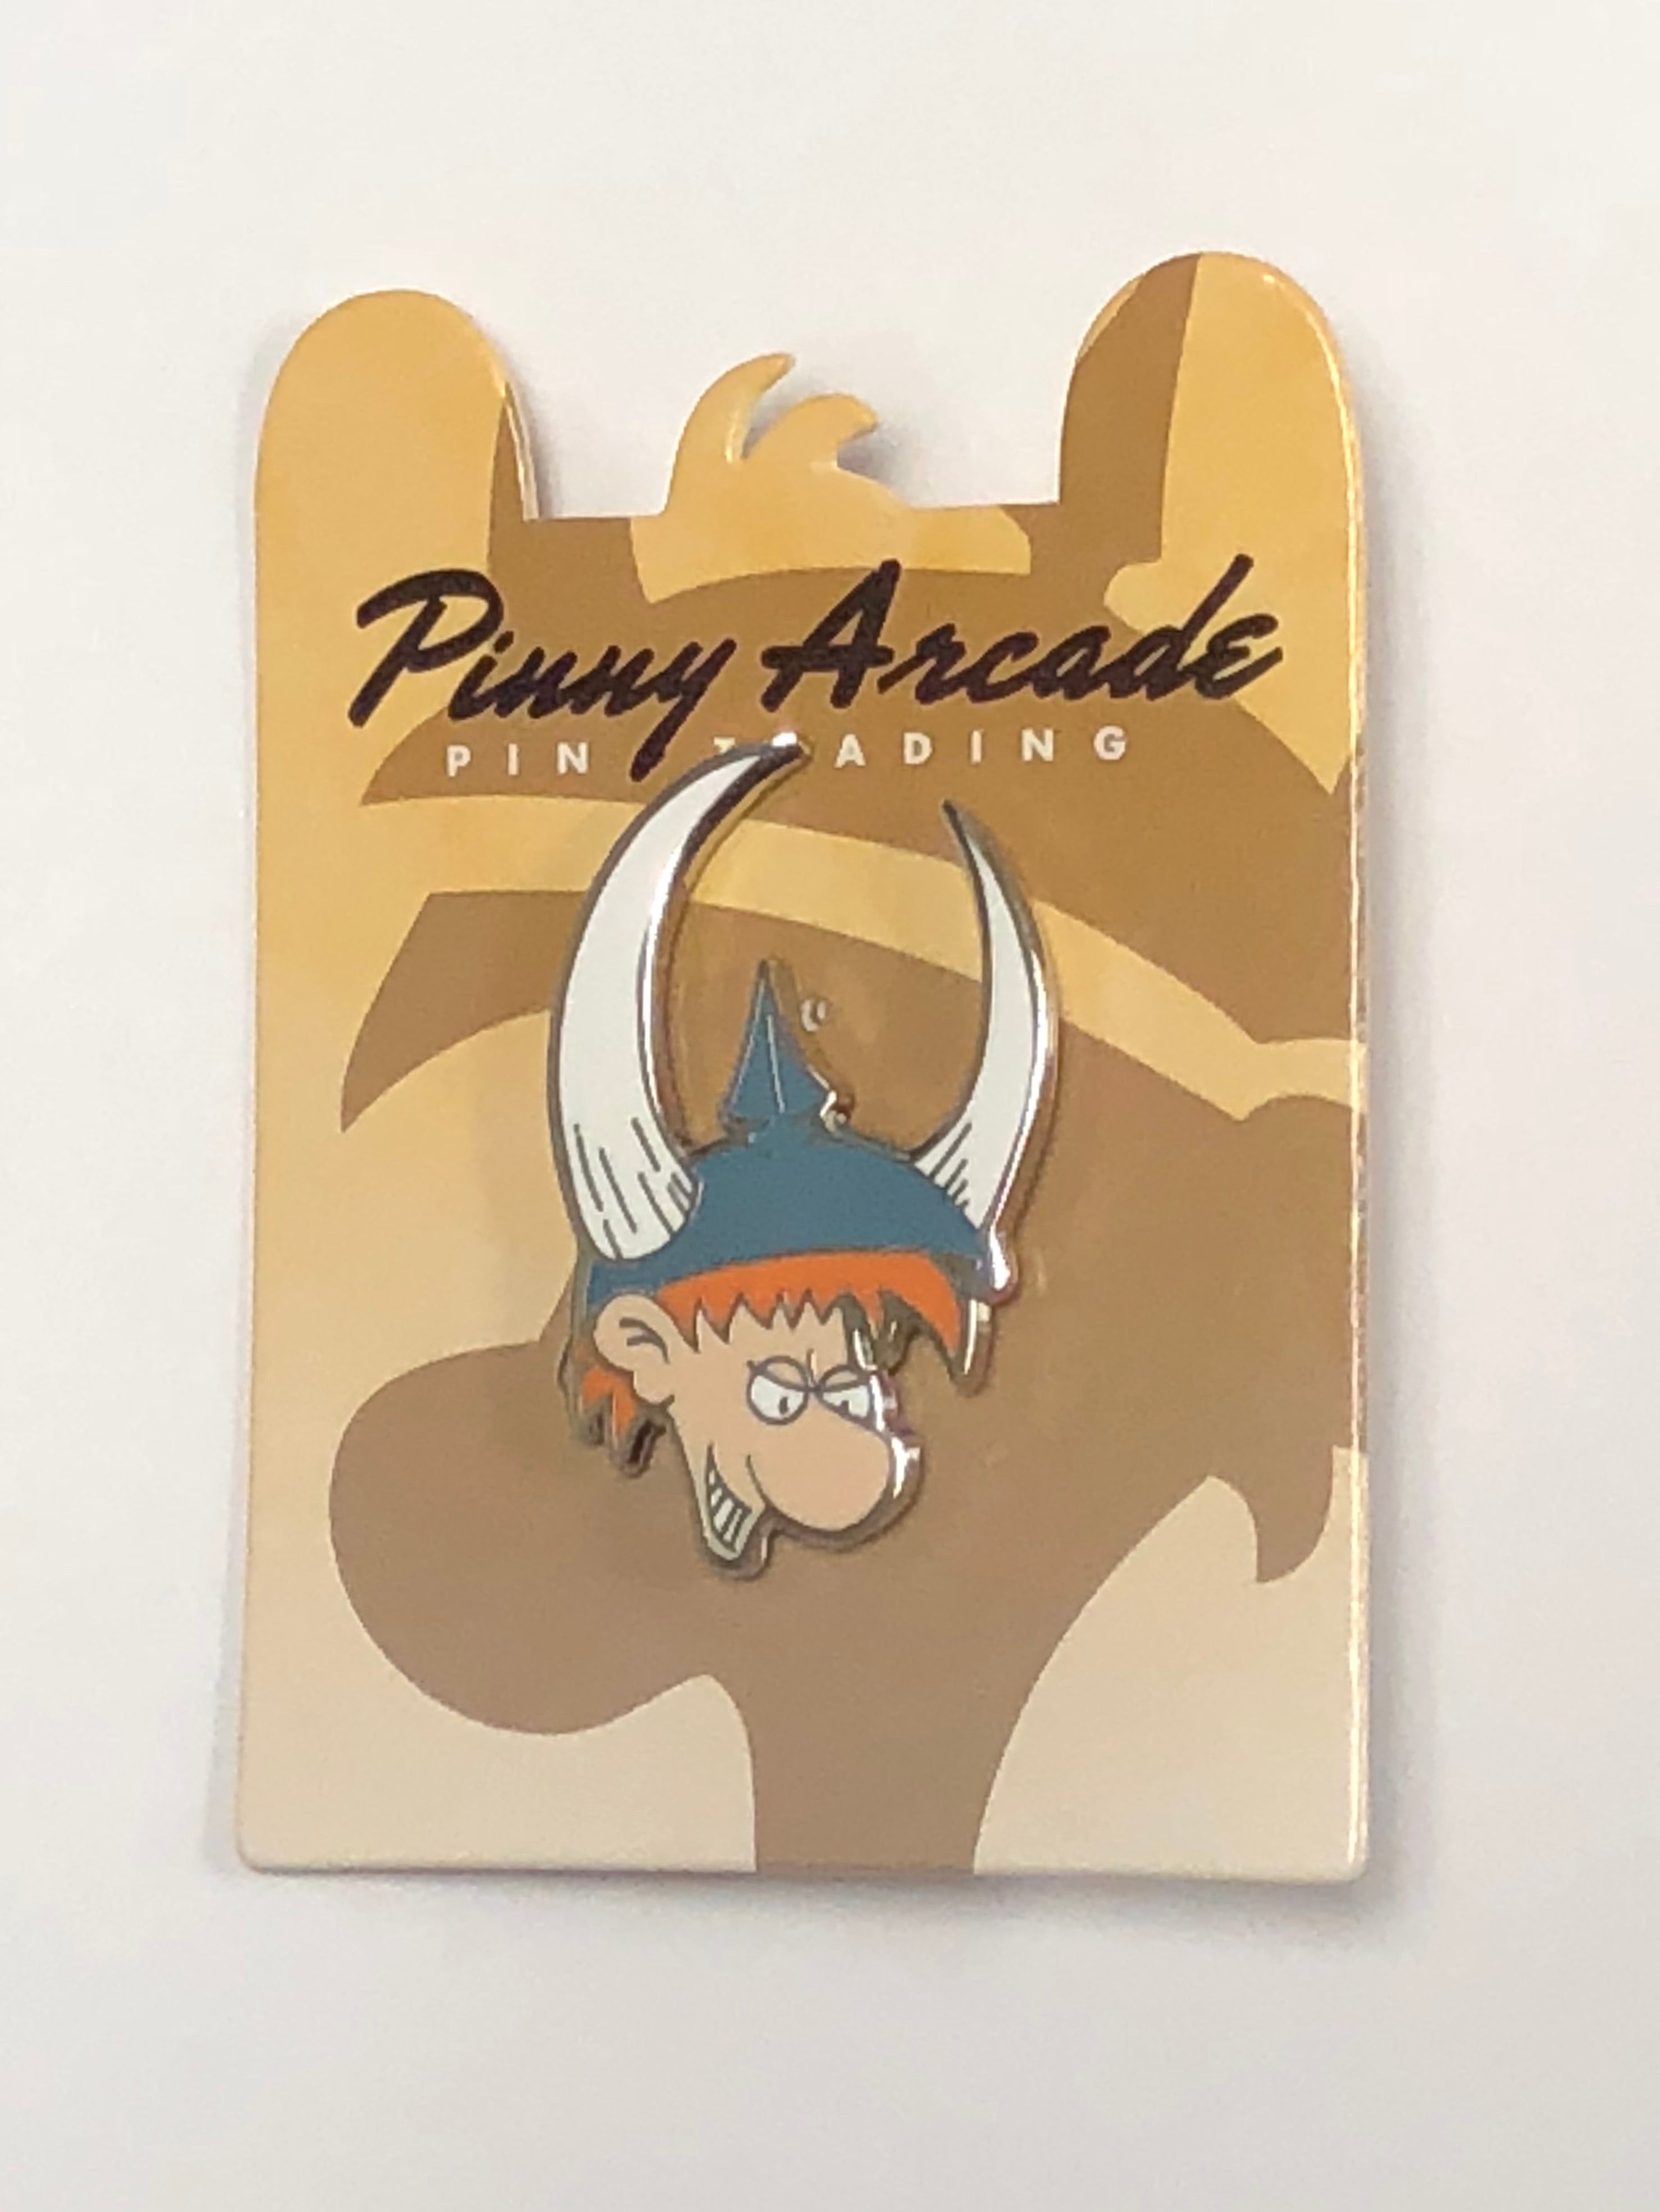 Munchkin Head Pinny Arcade Pin-1